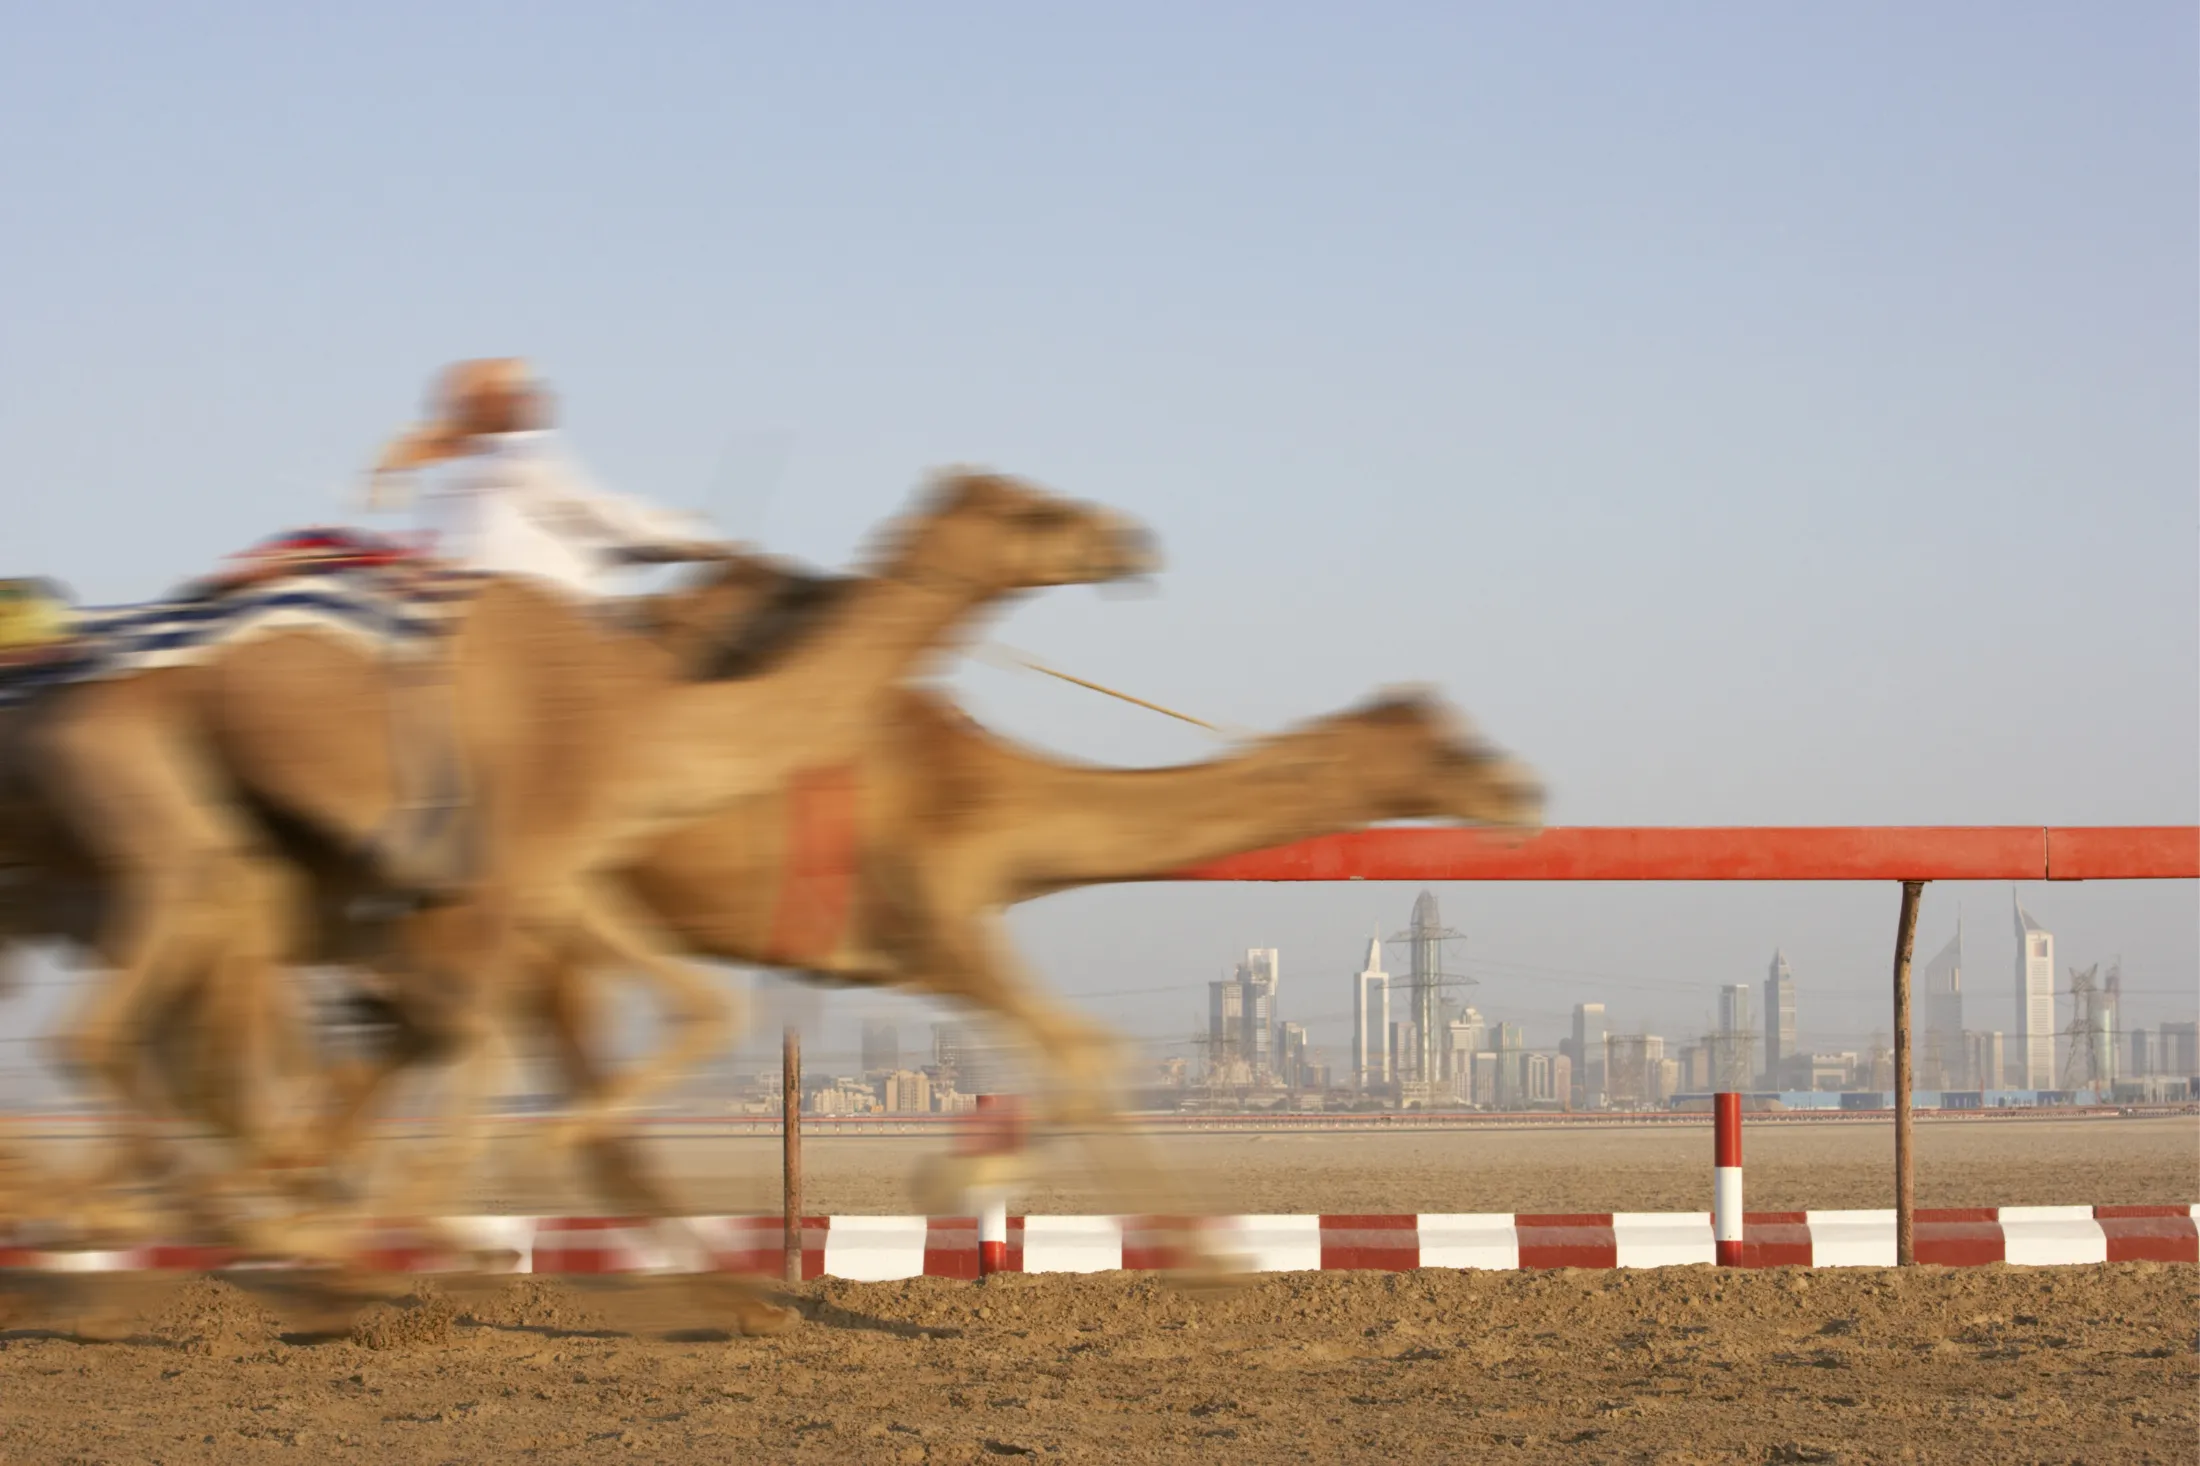 Camel Racing in Dubai